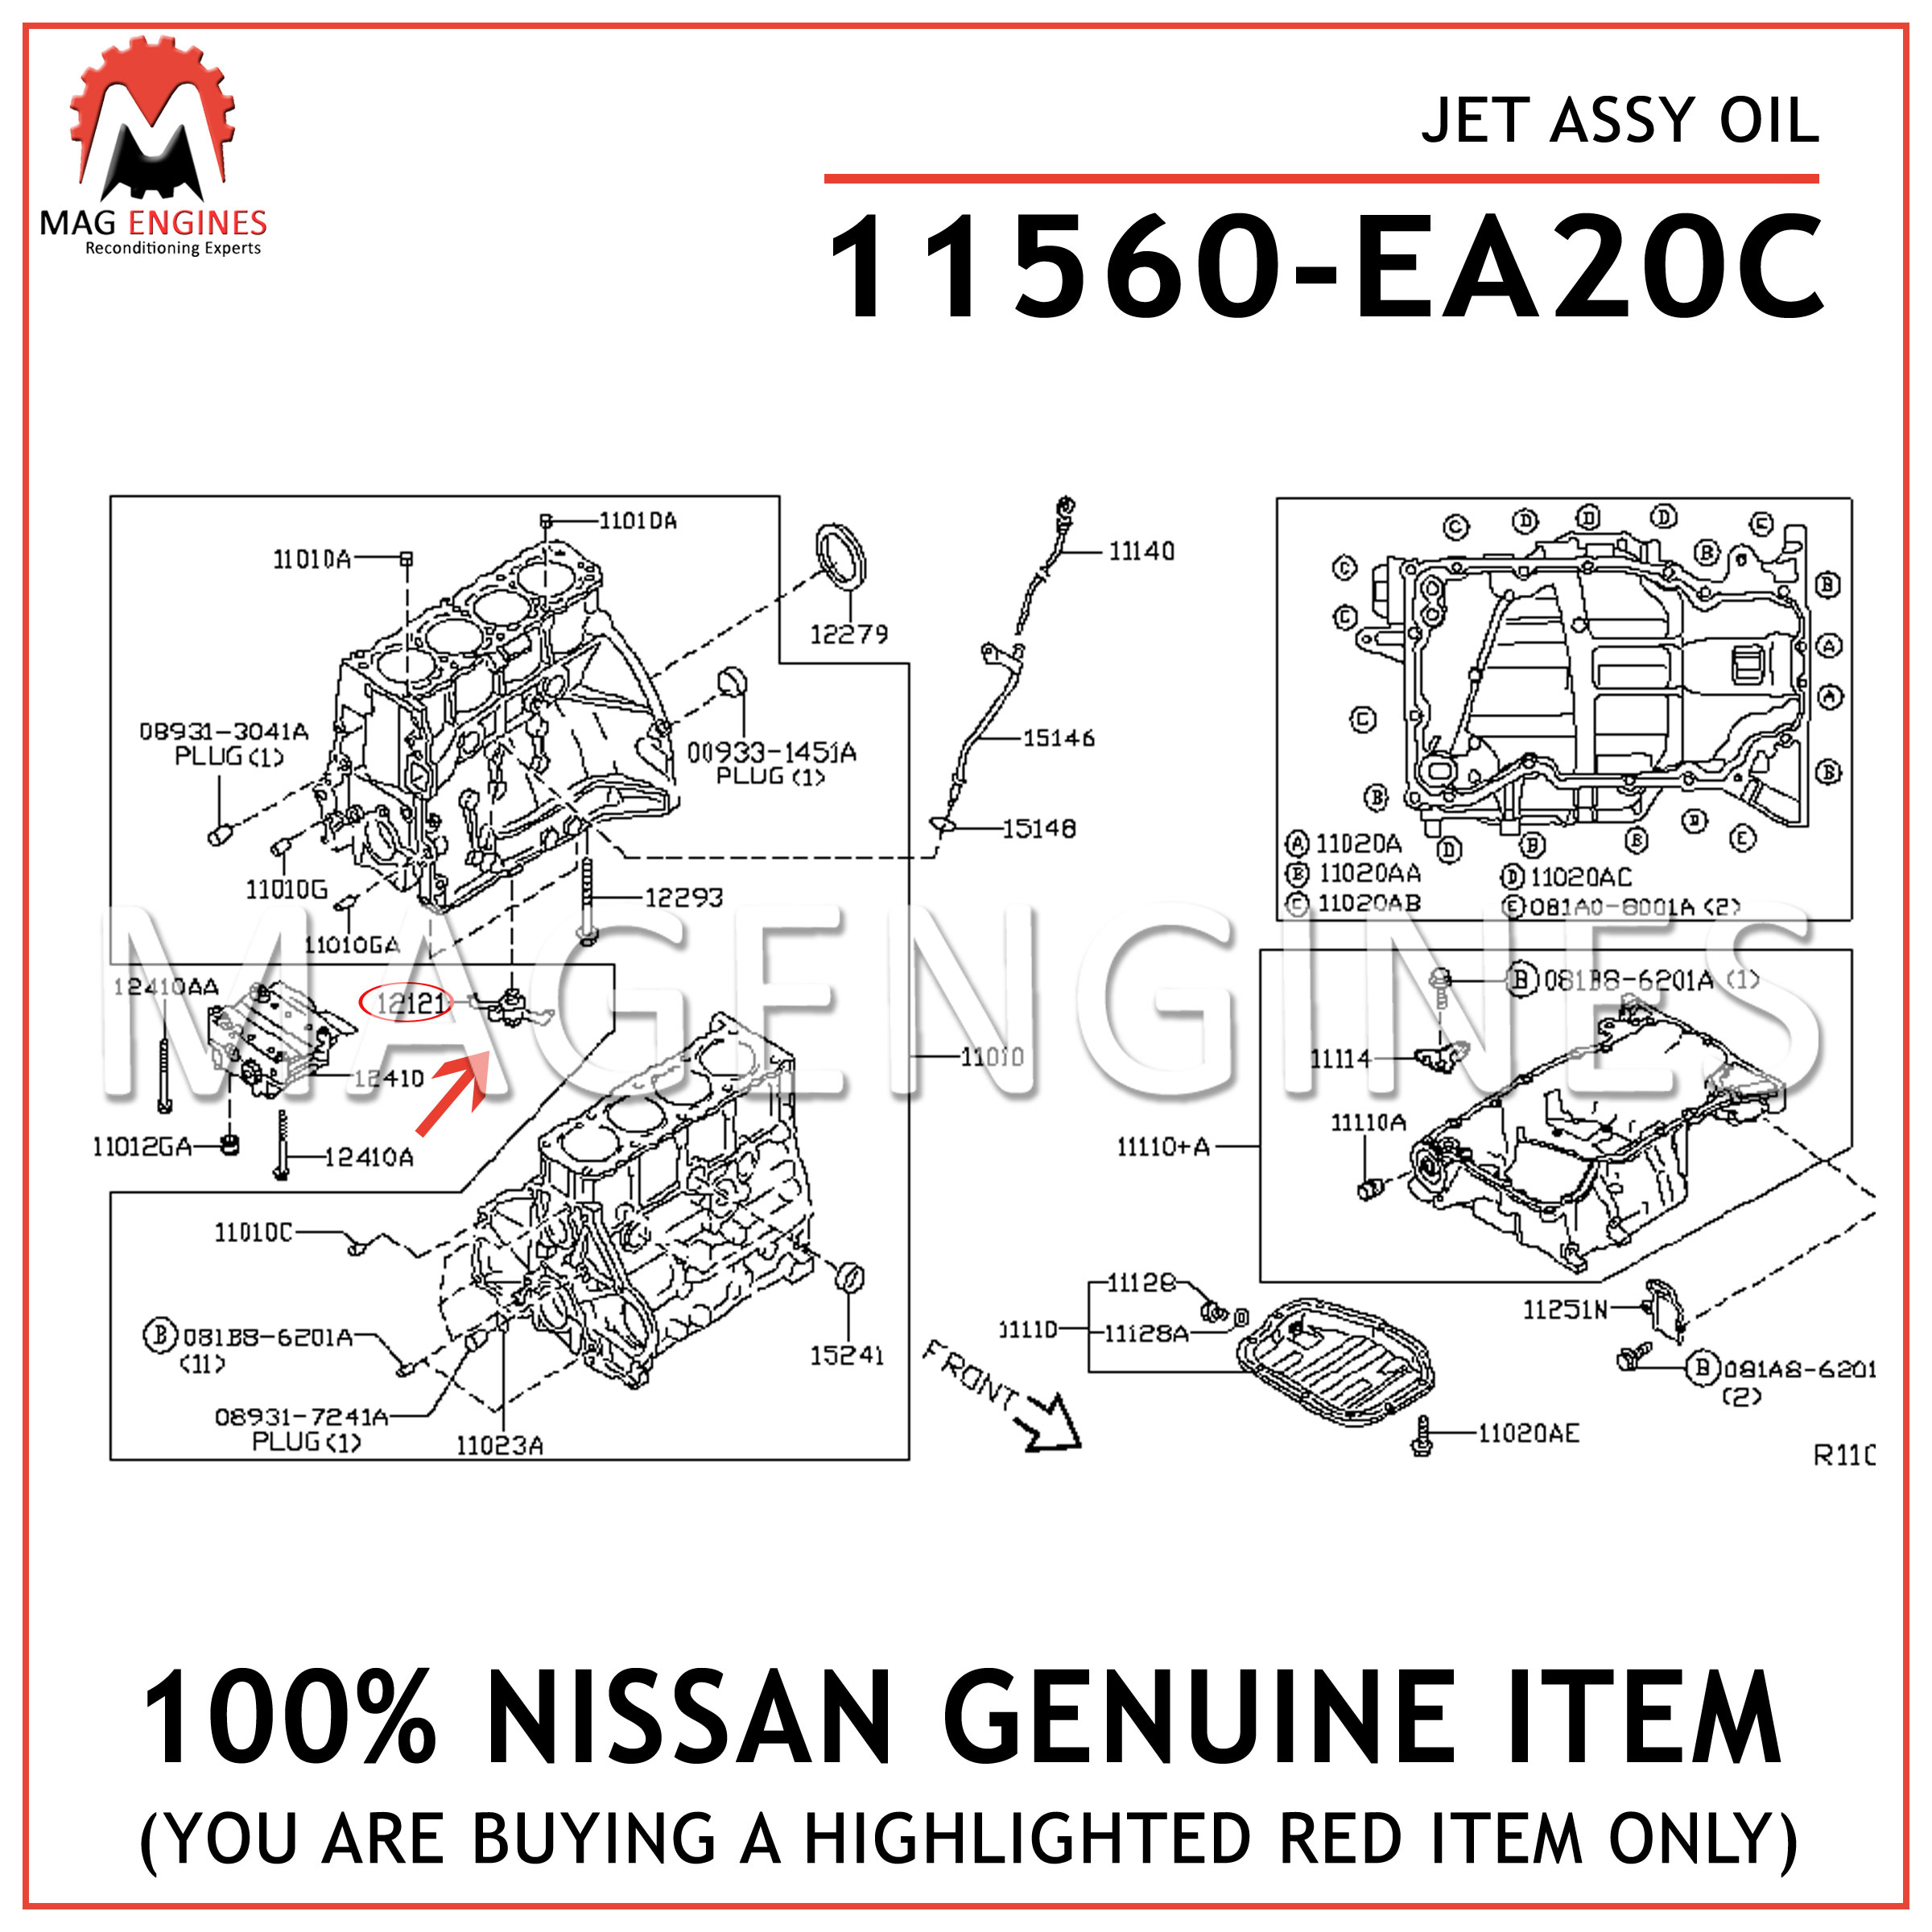 Genuine Nissan Jet Assembly-Oil 11560-EA20C 